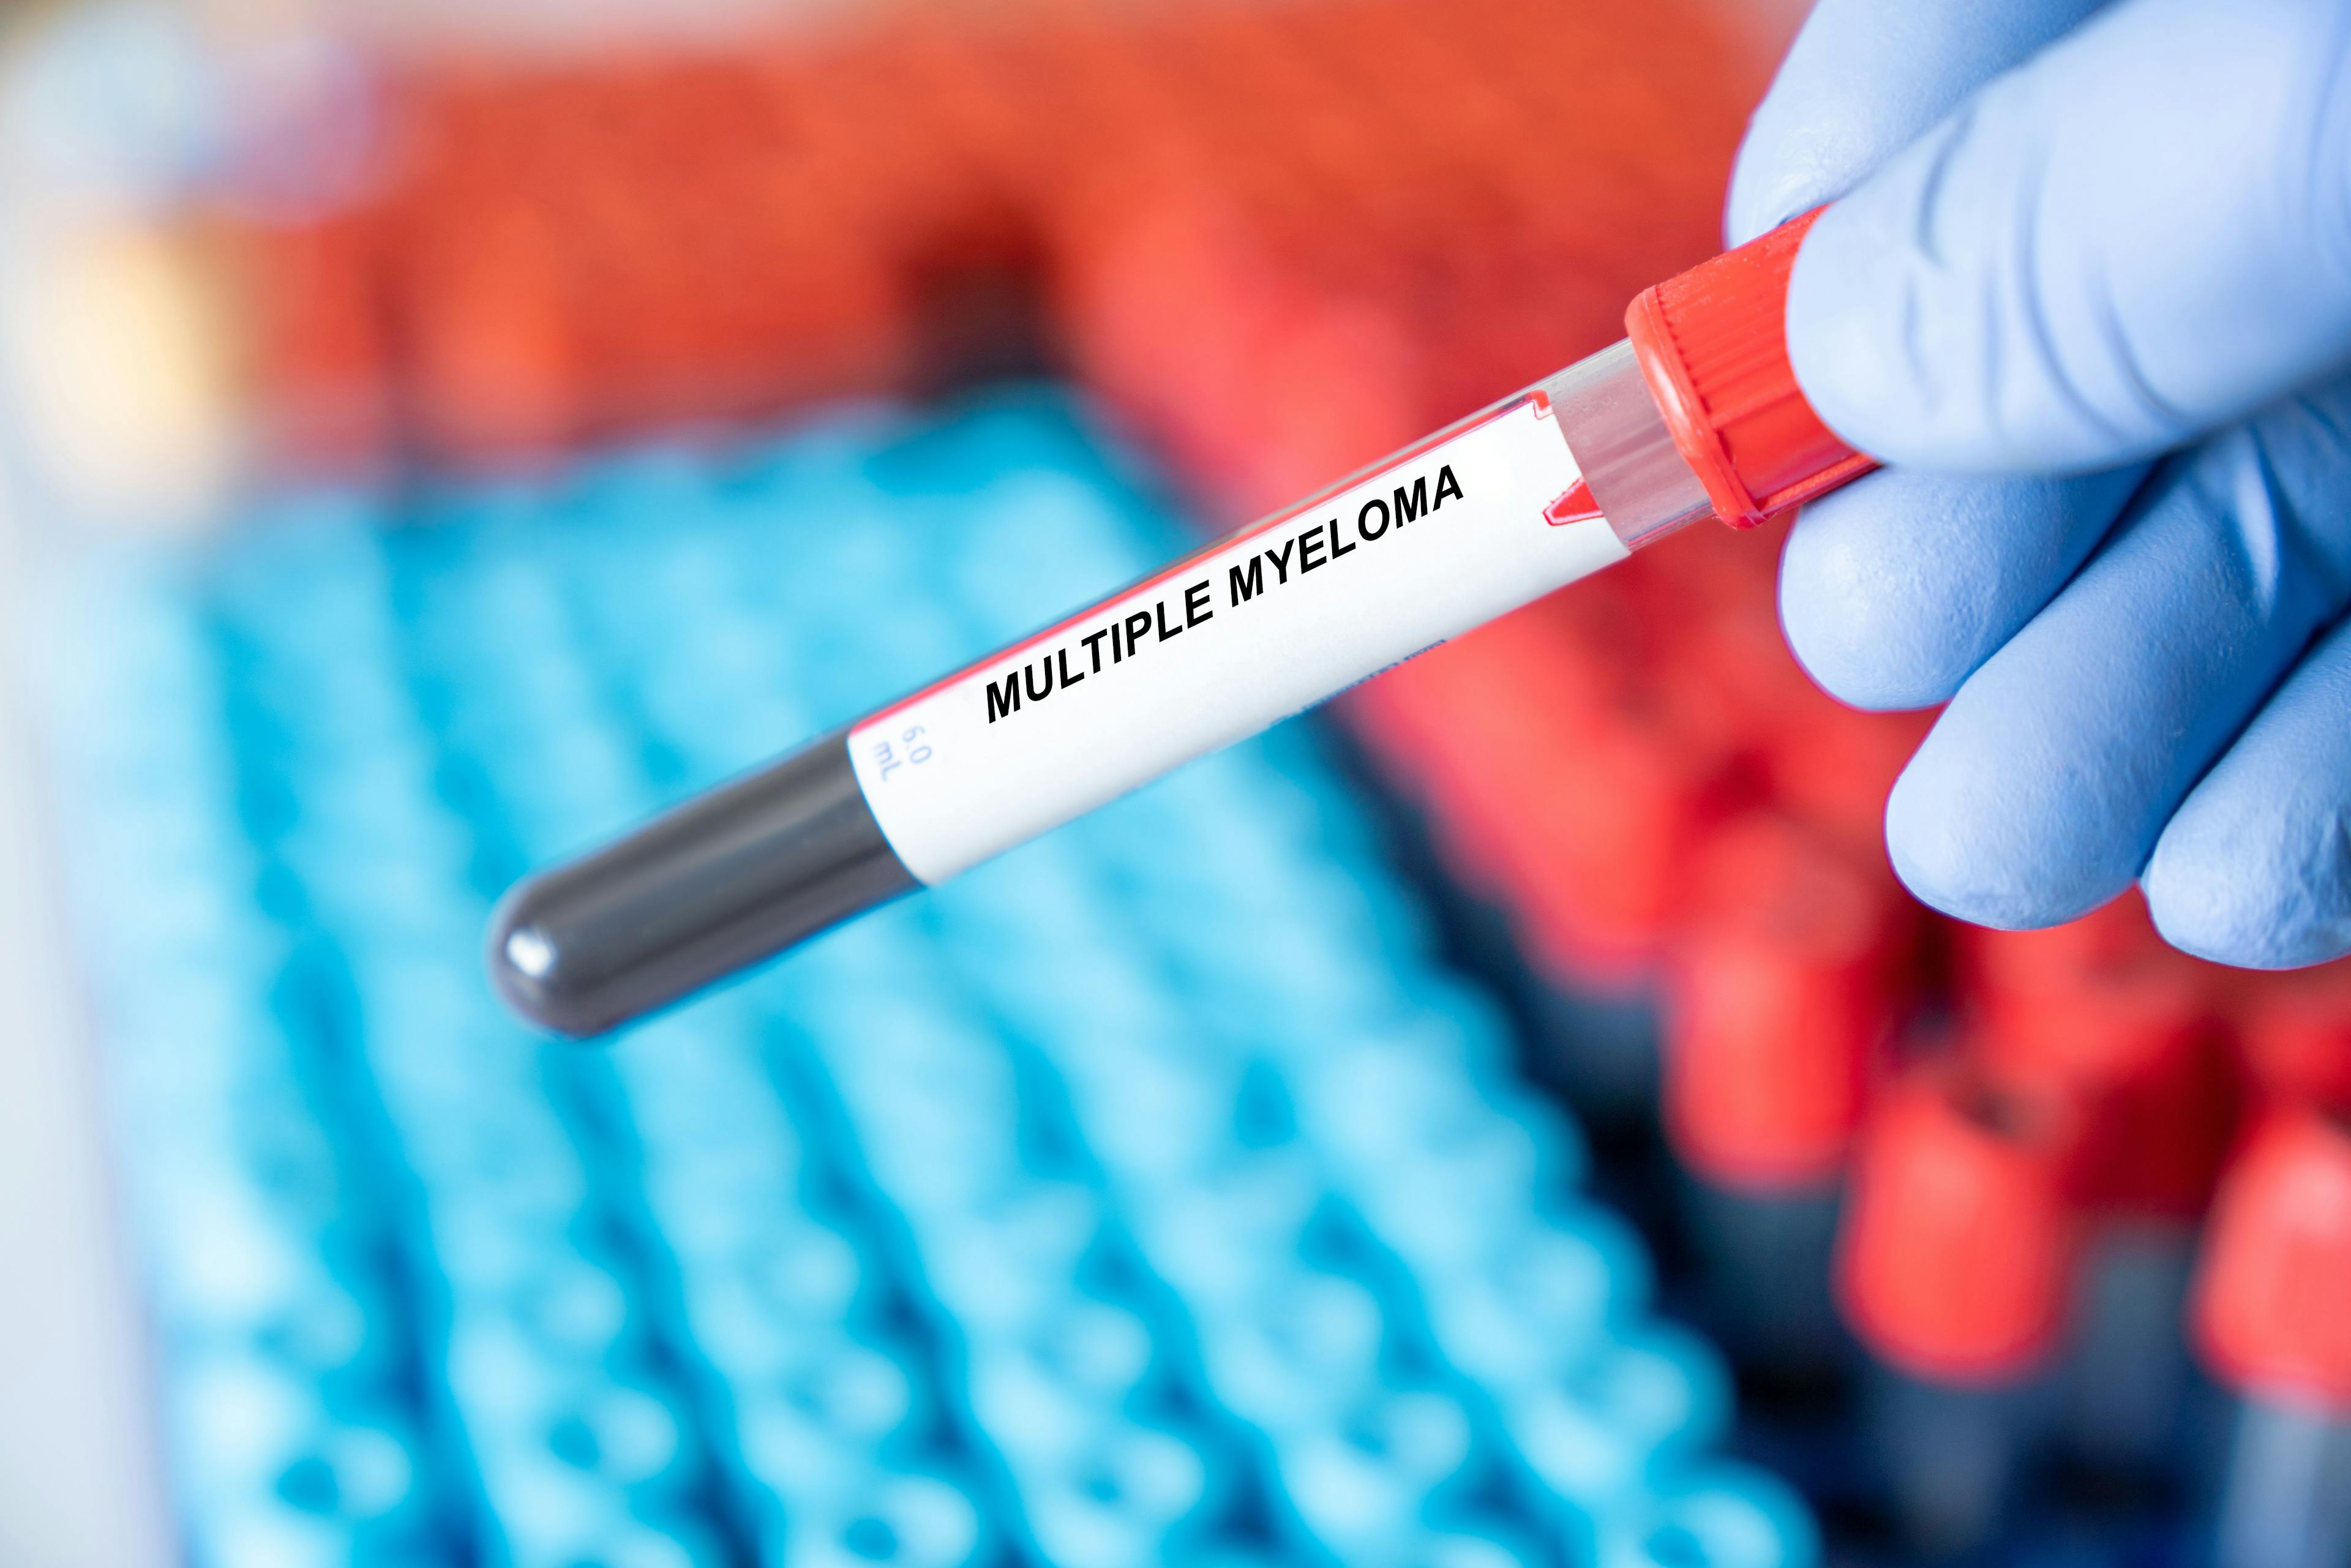 Multiple myeloma blood sample -- Image credit: luchschenF | stock.adobe.com